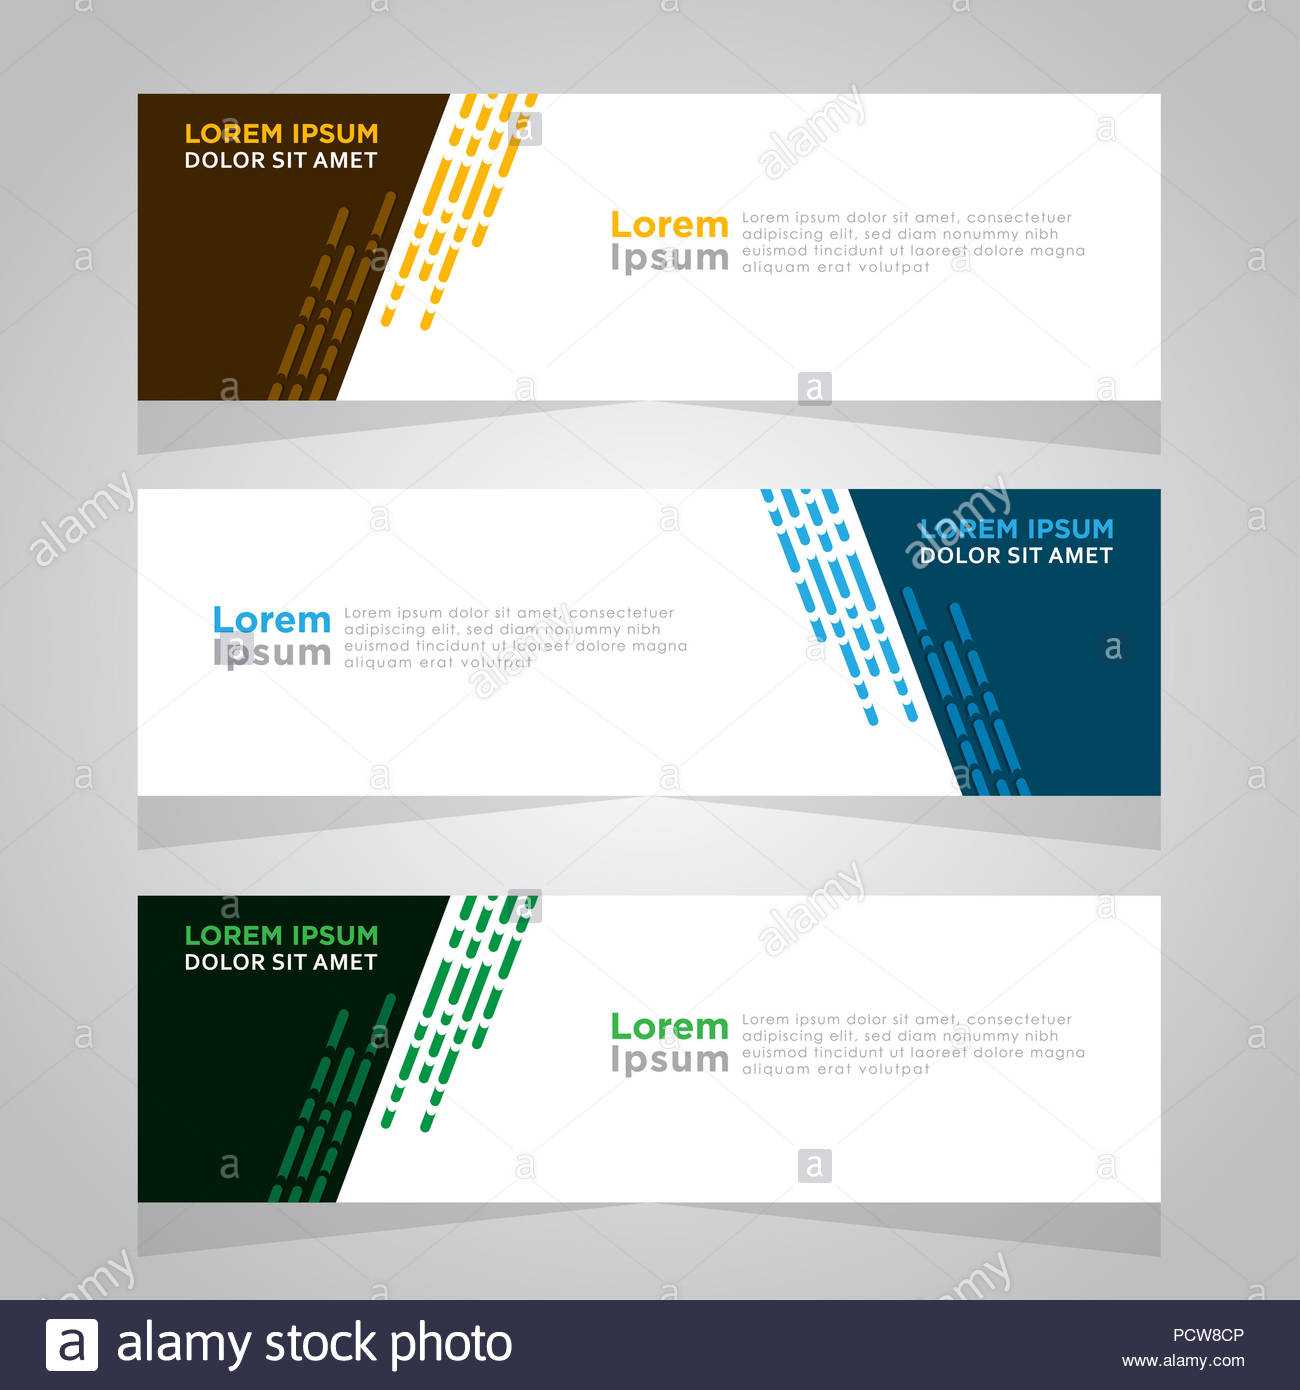 Vector Abstract Design Web Banner Template. Web Design In Website Banner Design Templates